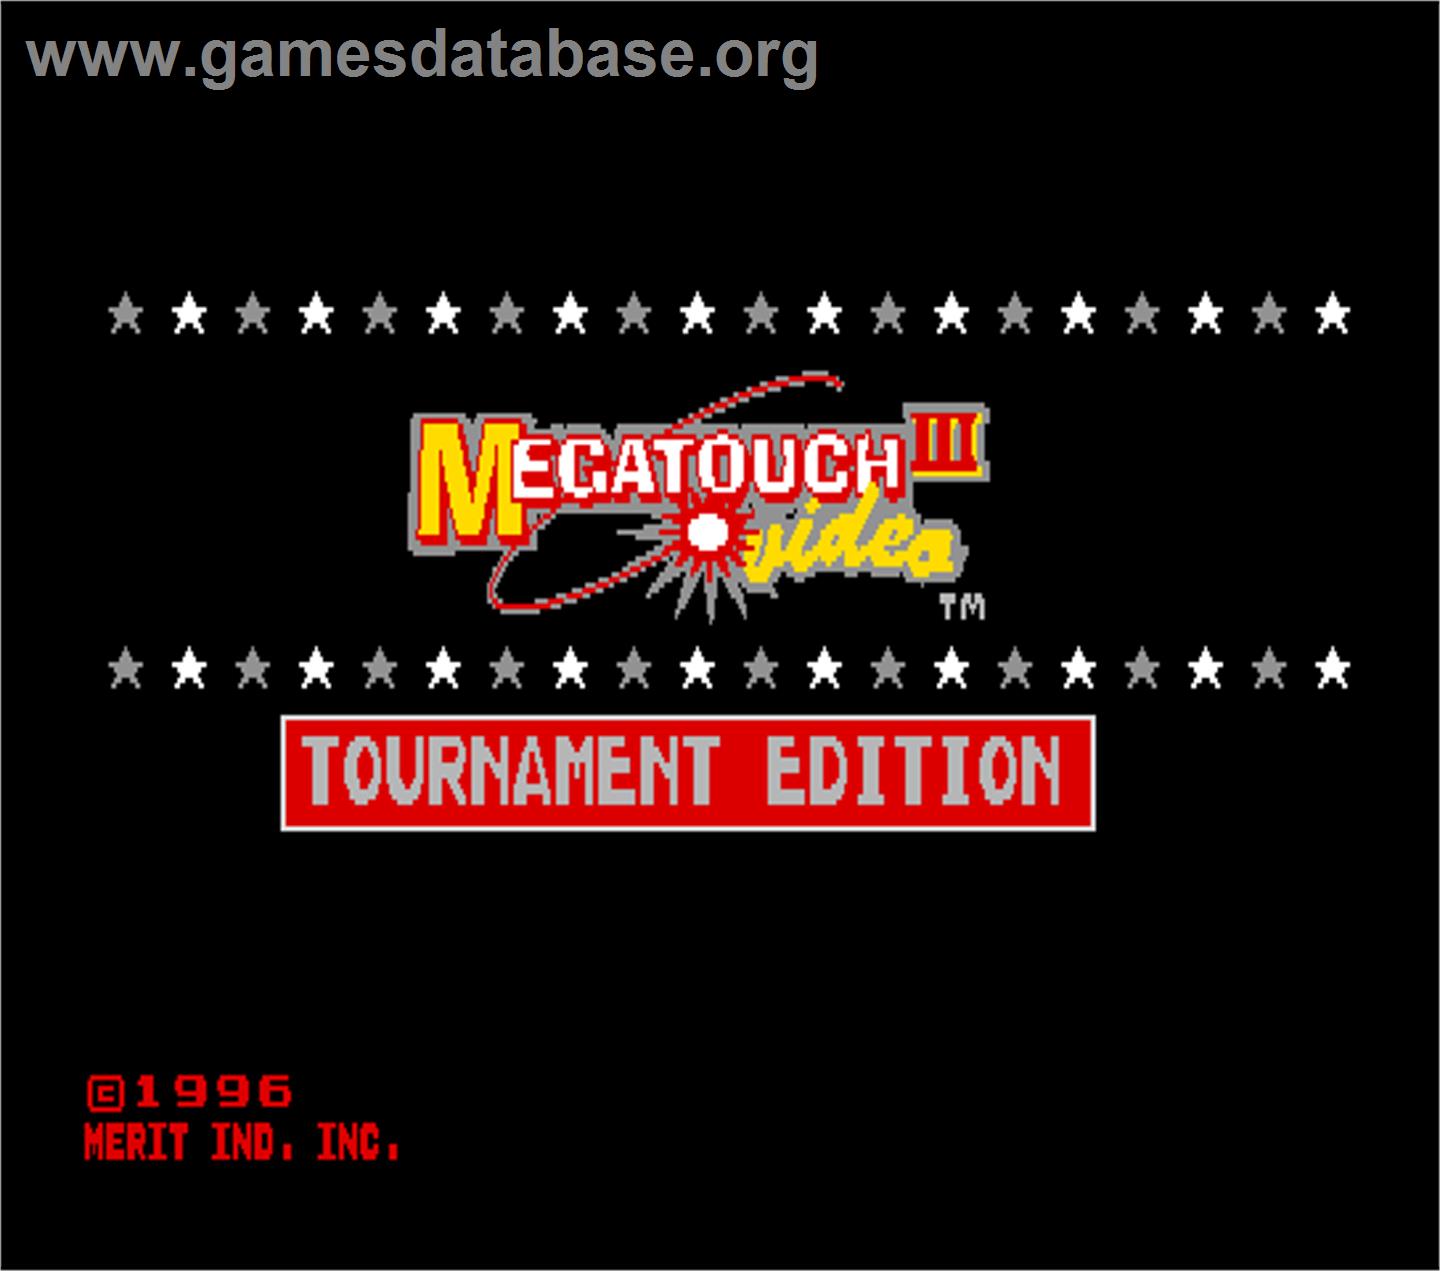 Megatouch III Tournament Edition - Arcade - Artwork - Title Screen